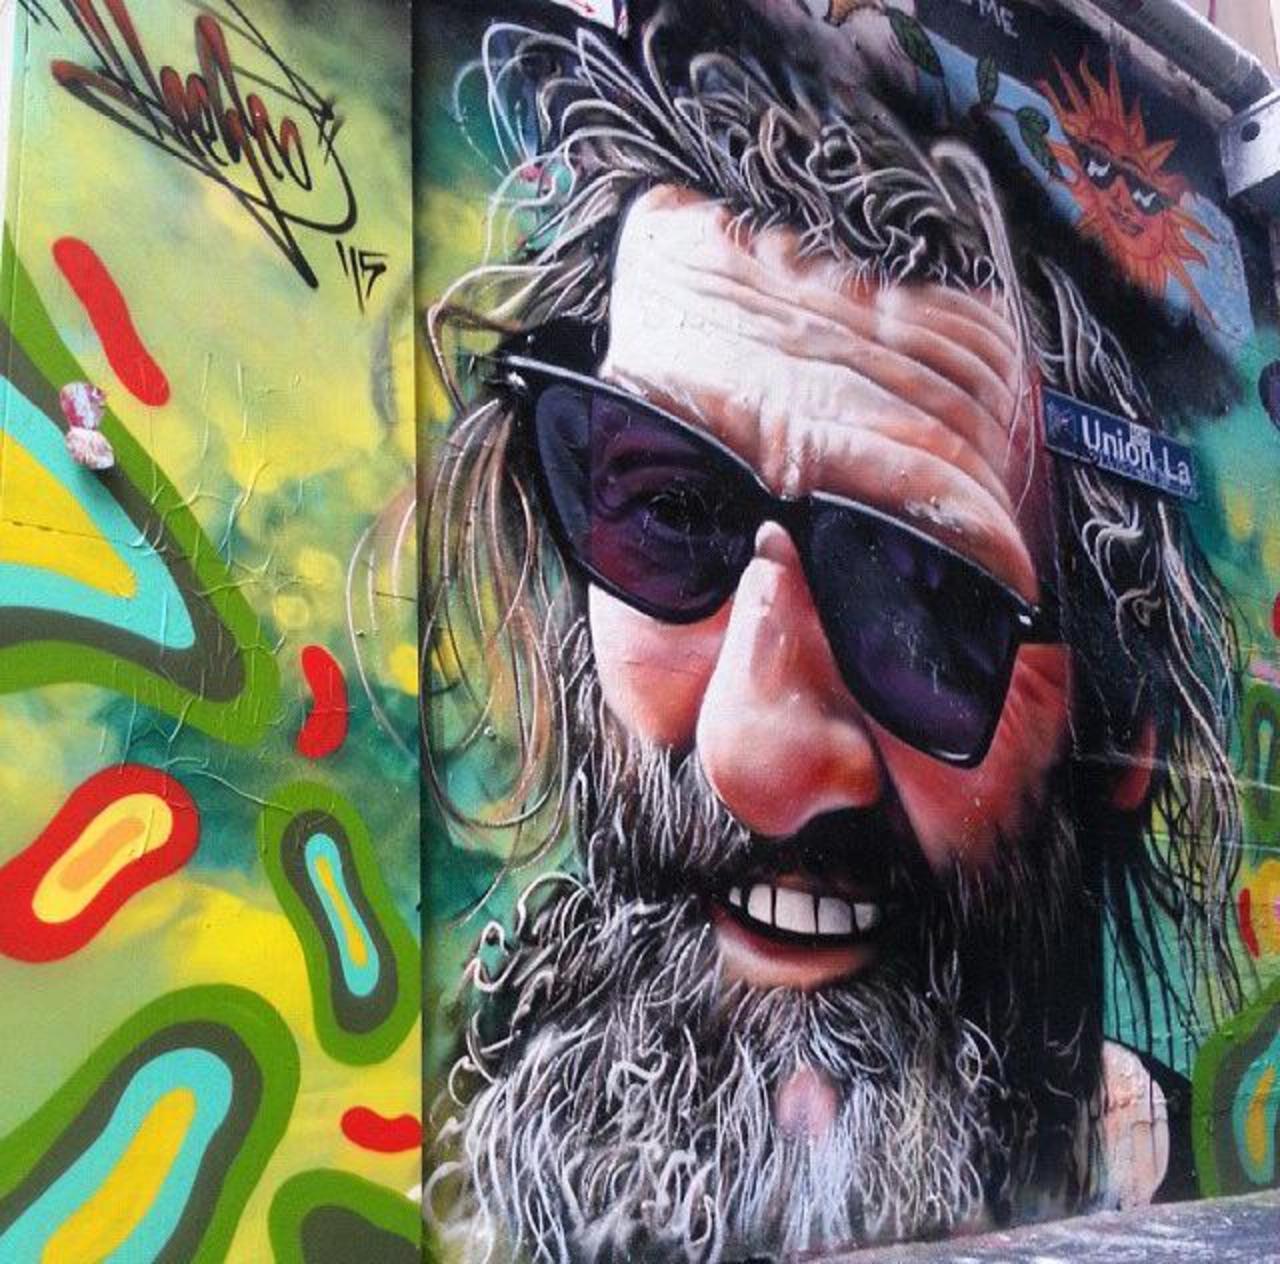 Street Art by Heesco in Melbourne 

#art #arte #graffiti #streetart http://t.co/QL6jn952pp